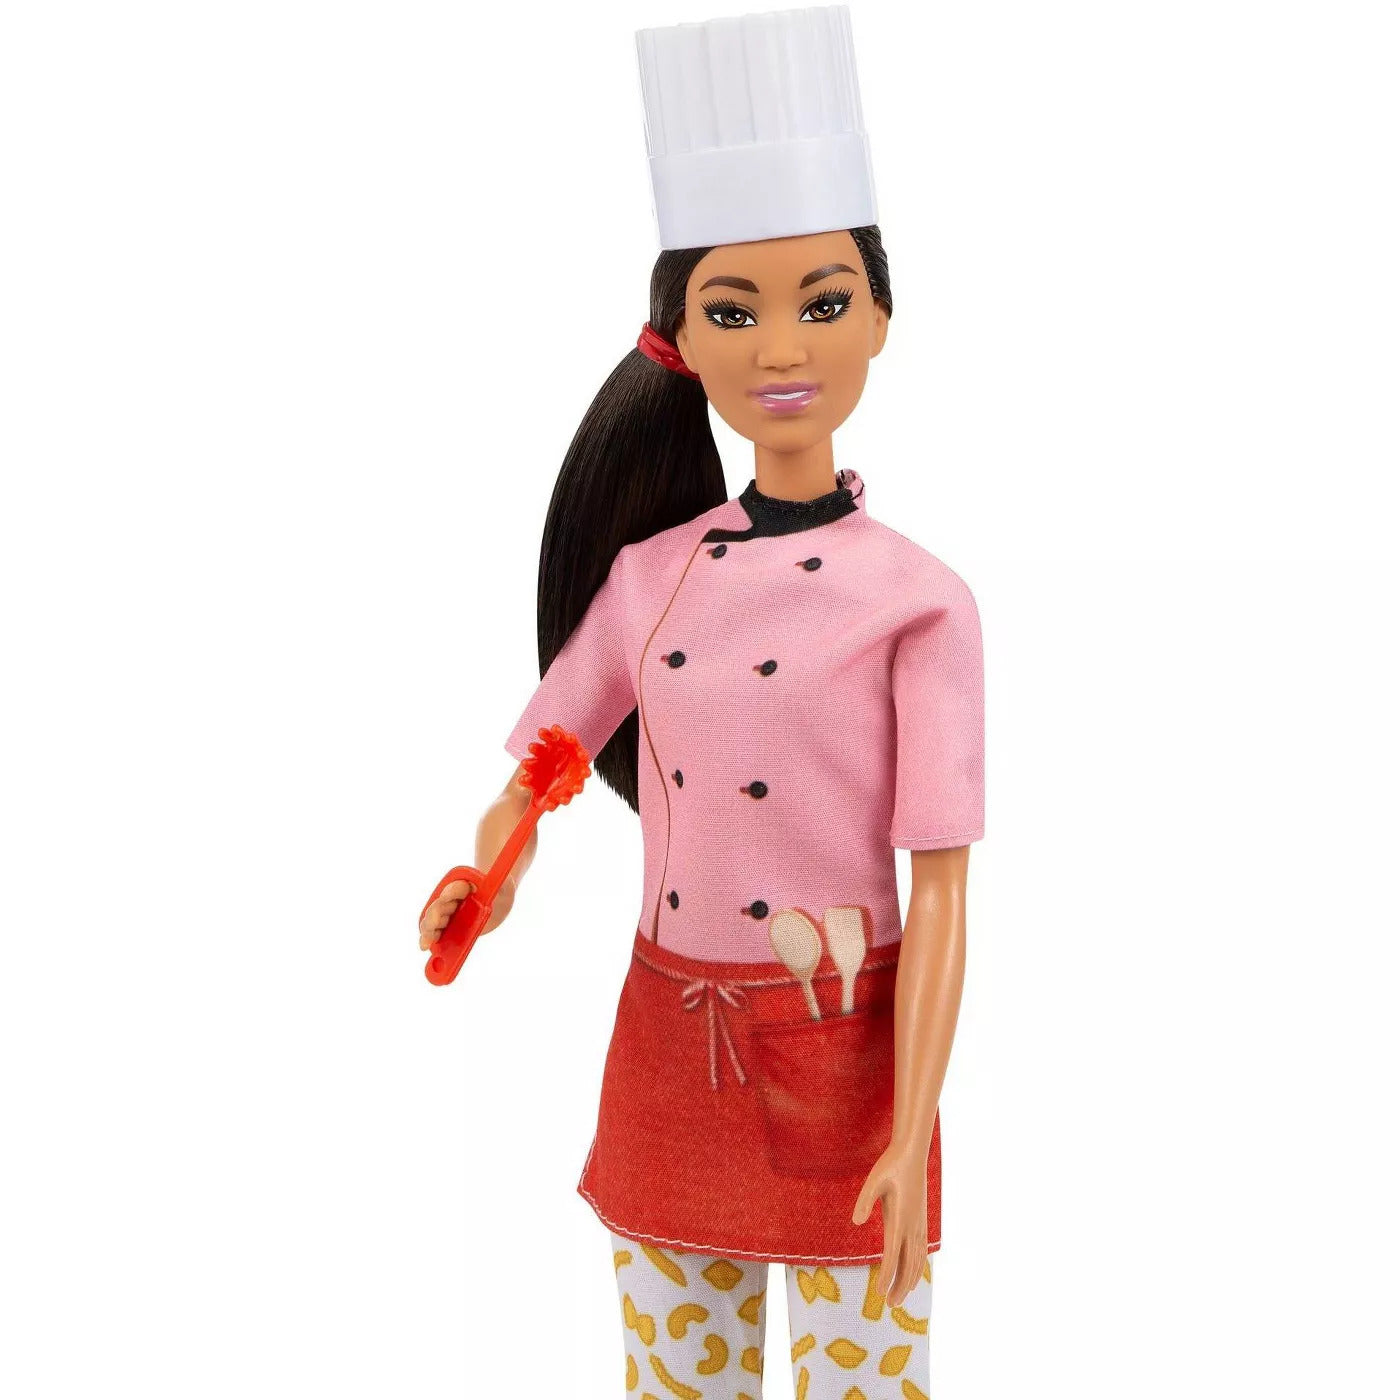 Barbie Careers Doll - Pasta Chef